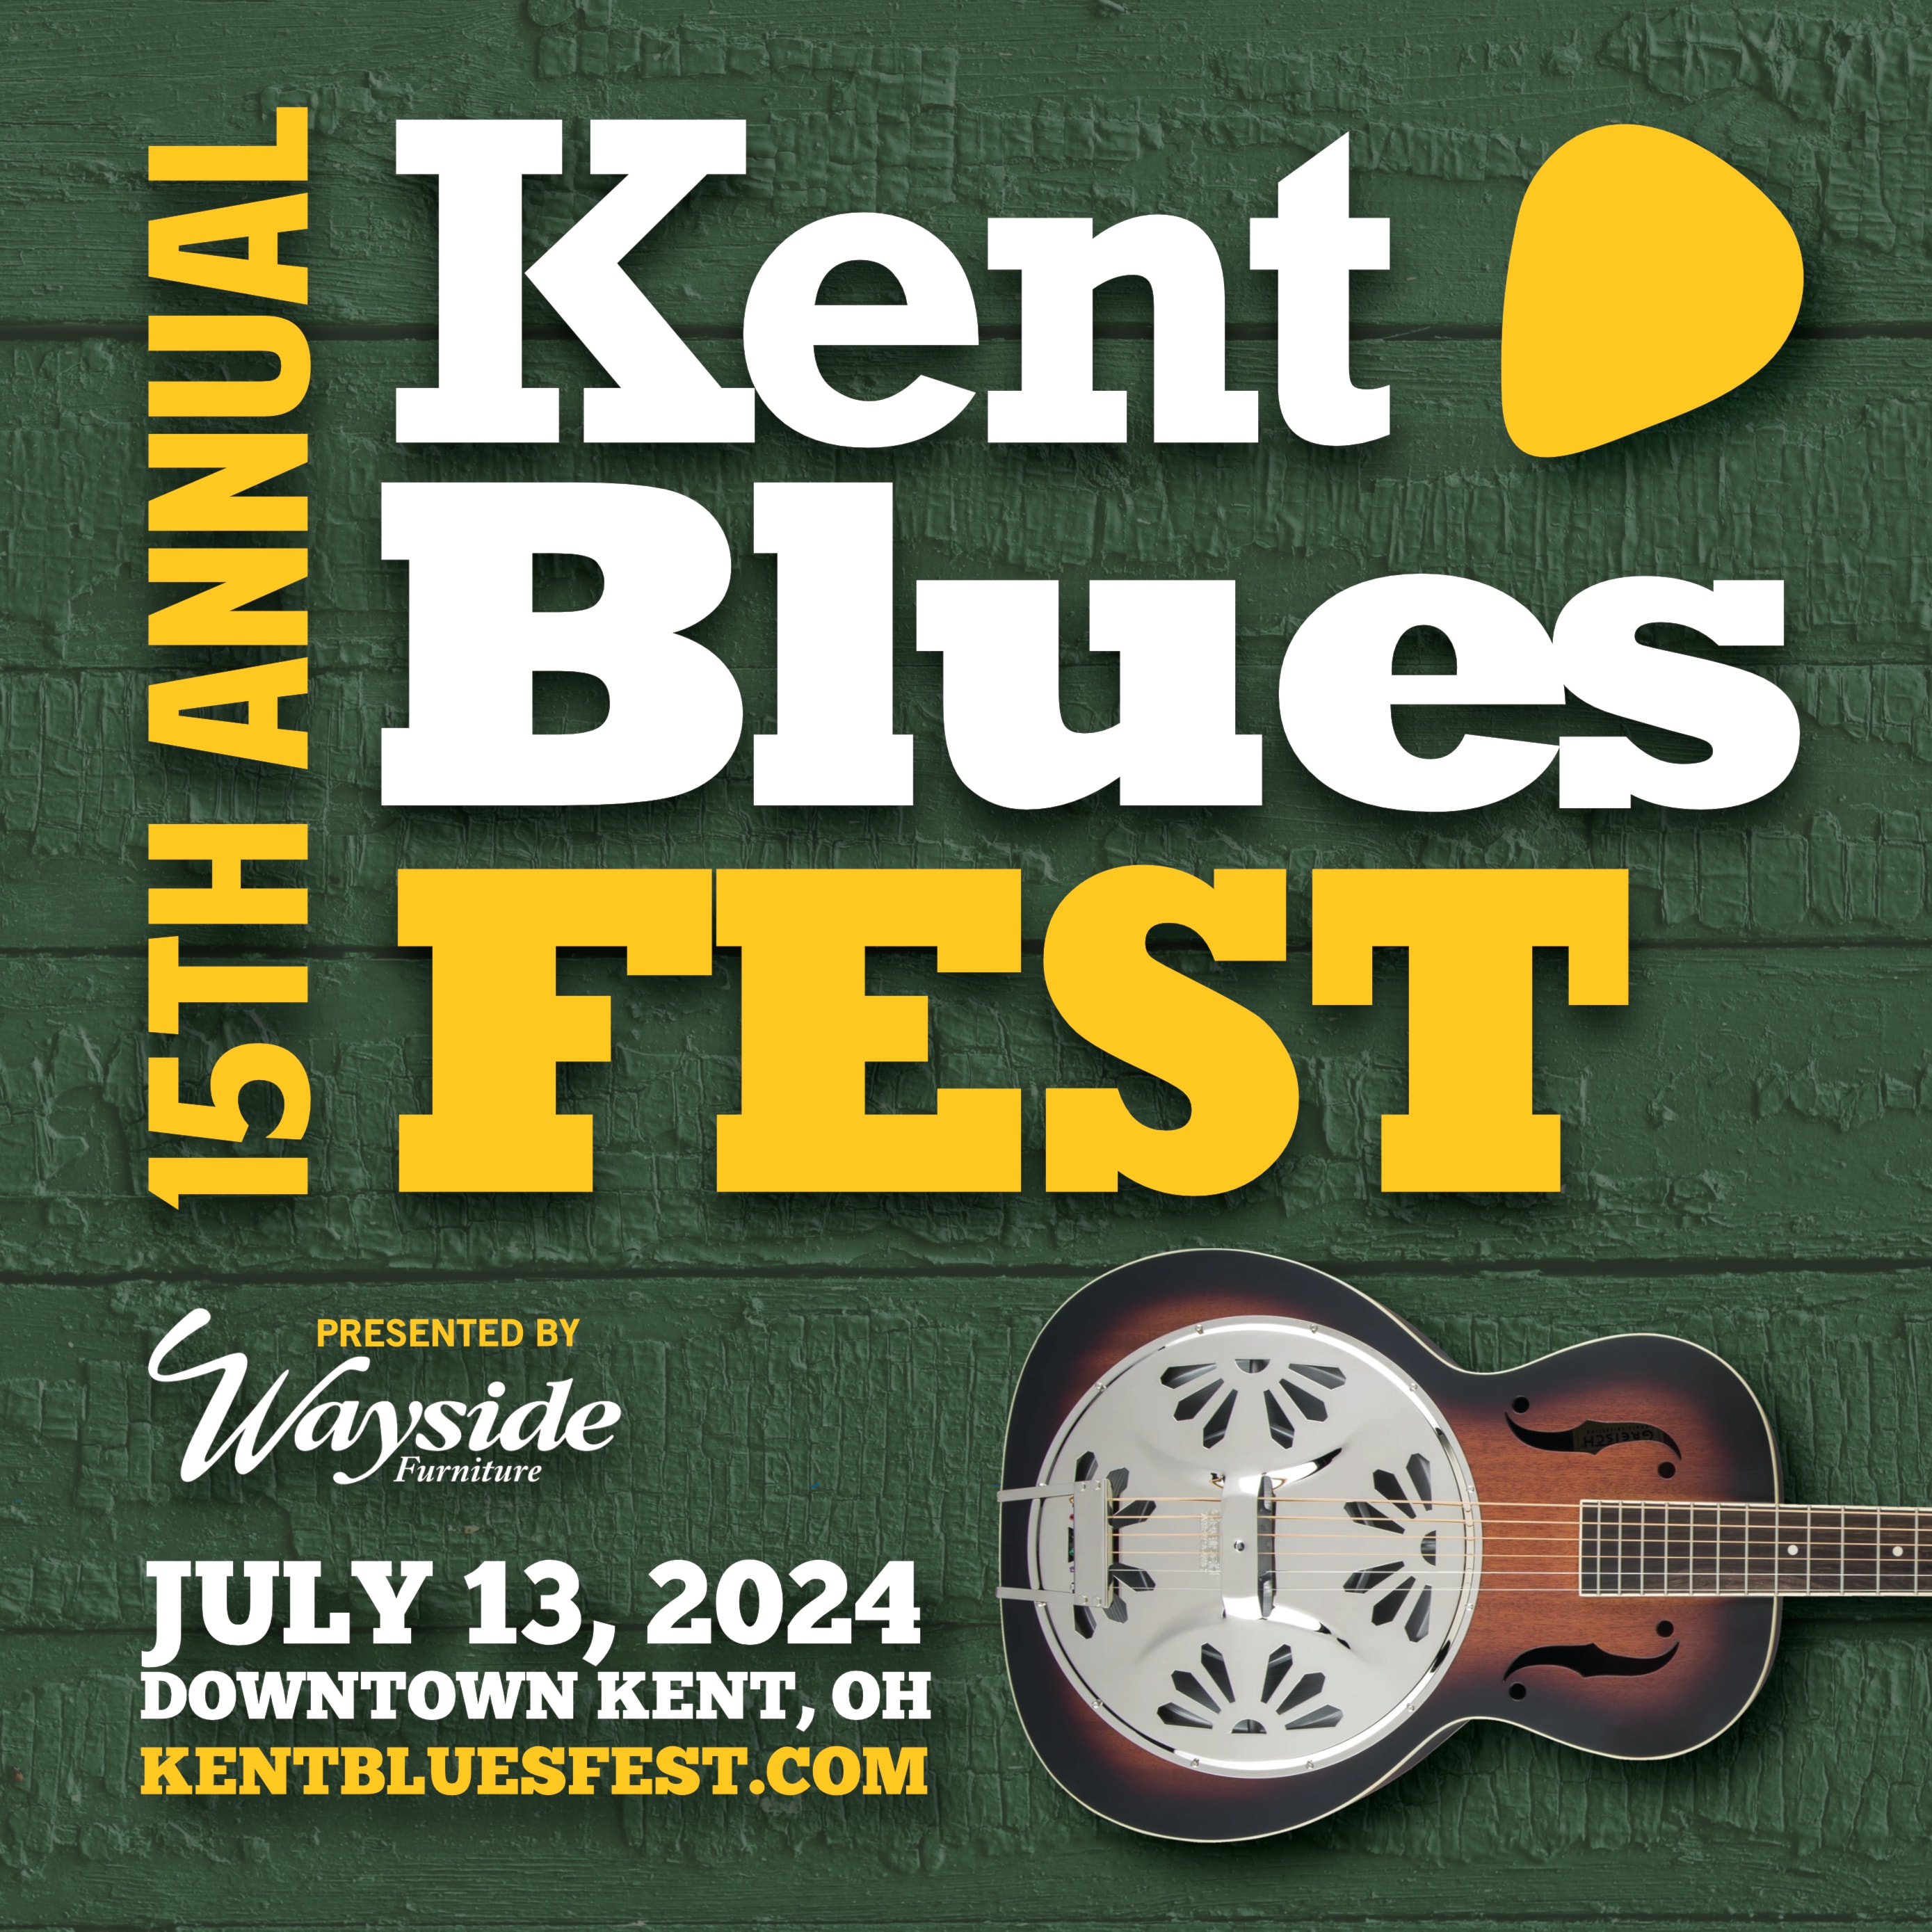 15th Annual Kent Blues Fest July 13, 2024 downtown Kent. Kentbluesfest.com